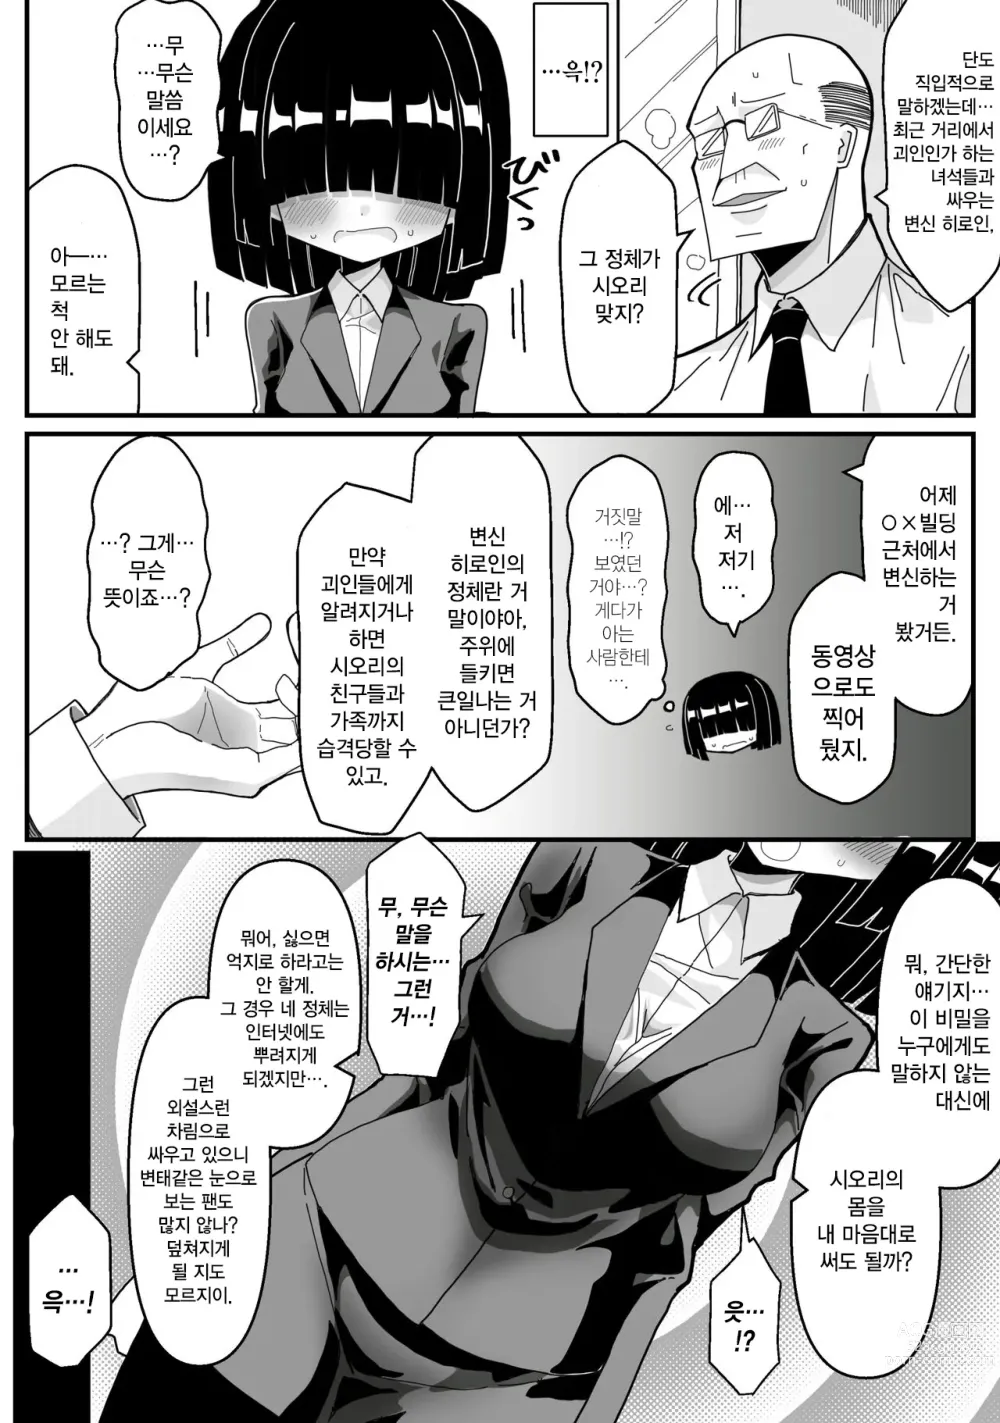 Page 5 of doujinshi 몰래 변신 히로인 하는 수수 거유 OL이 성희롱 상사에게 정체를 들켜서 범해지는 이야기